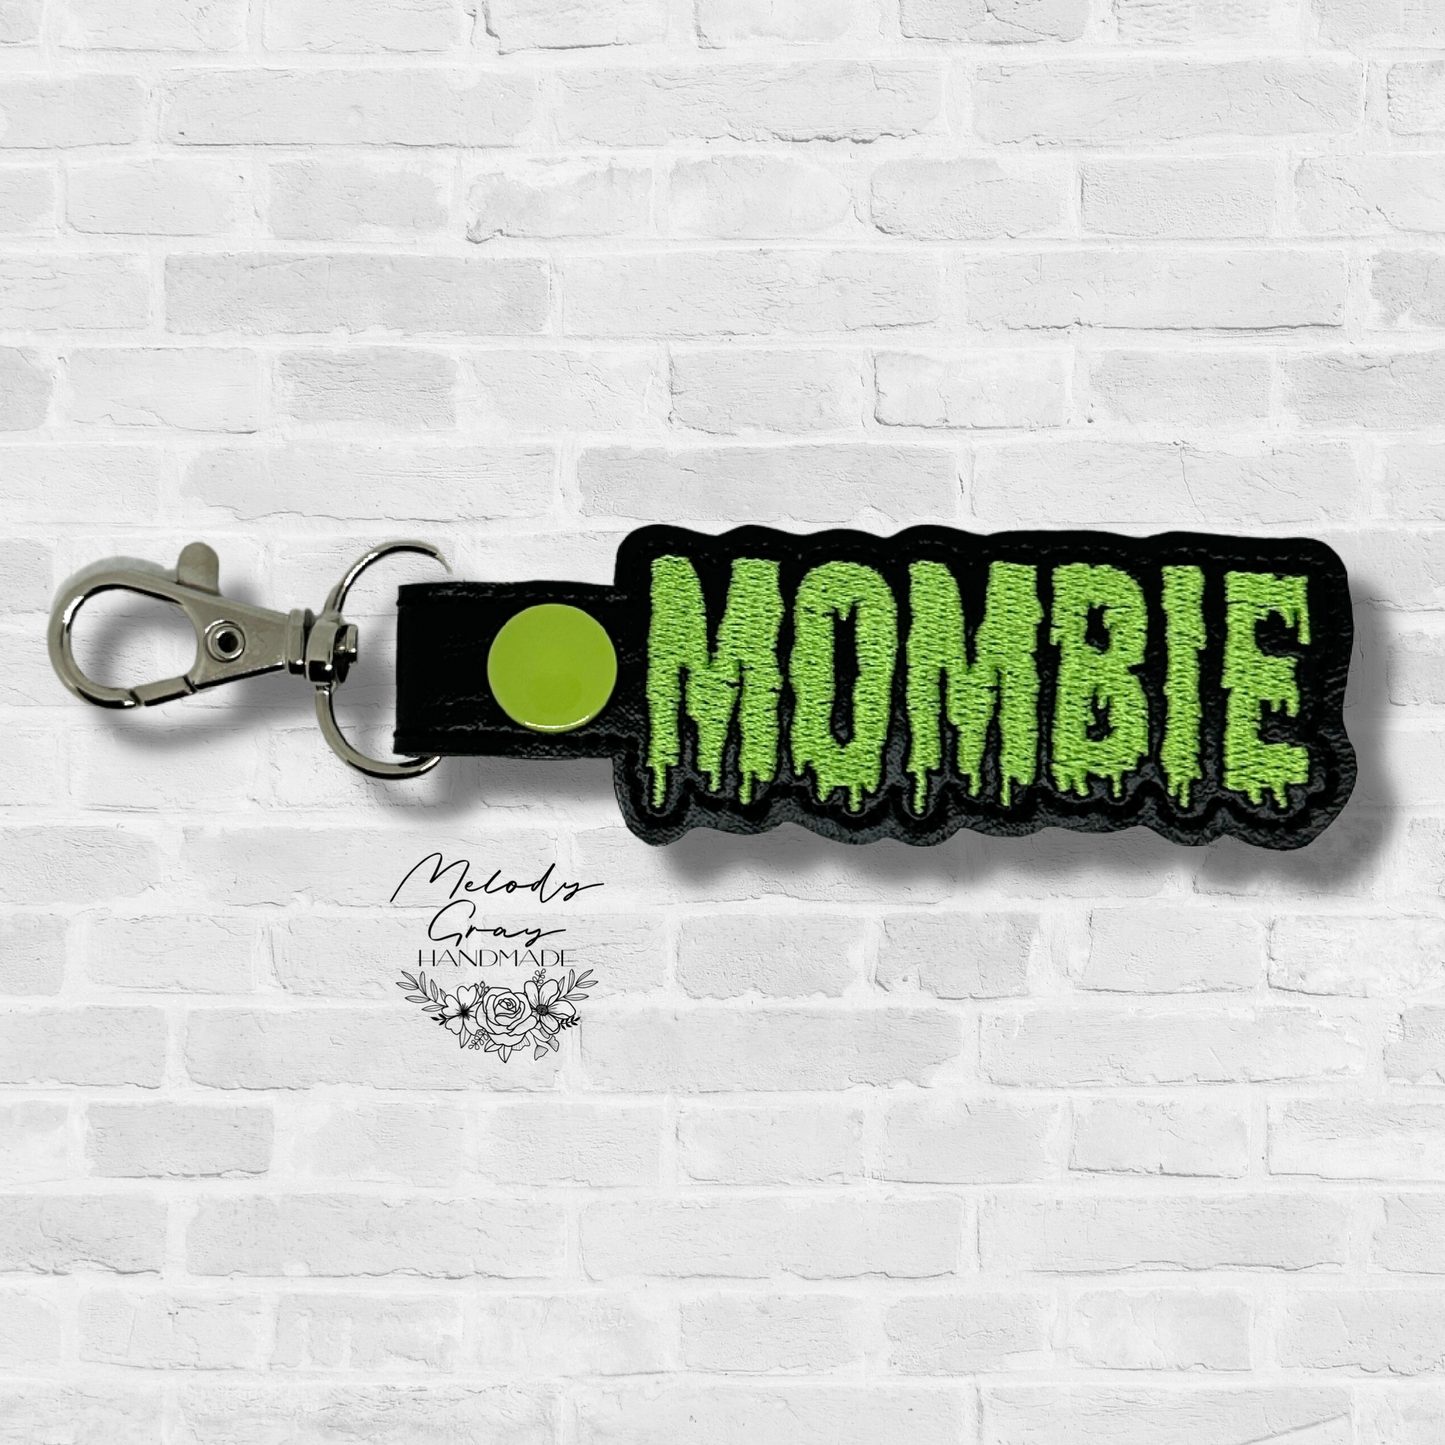 Mombie Keychain